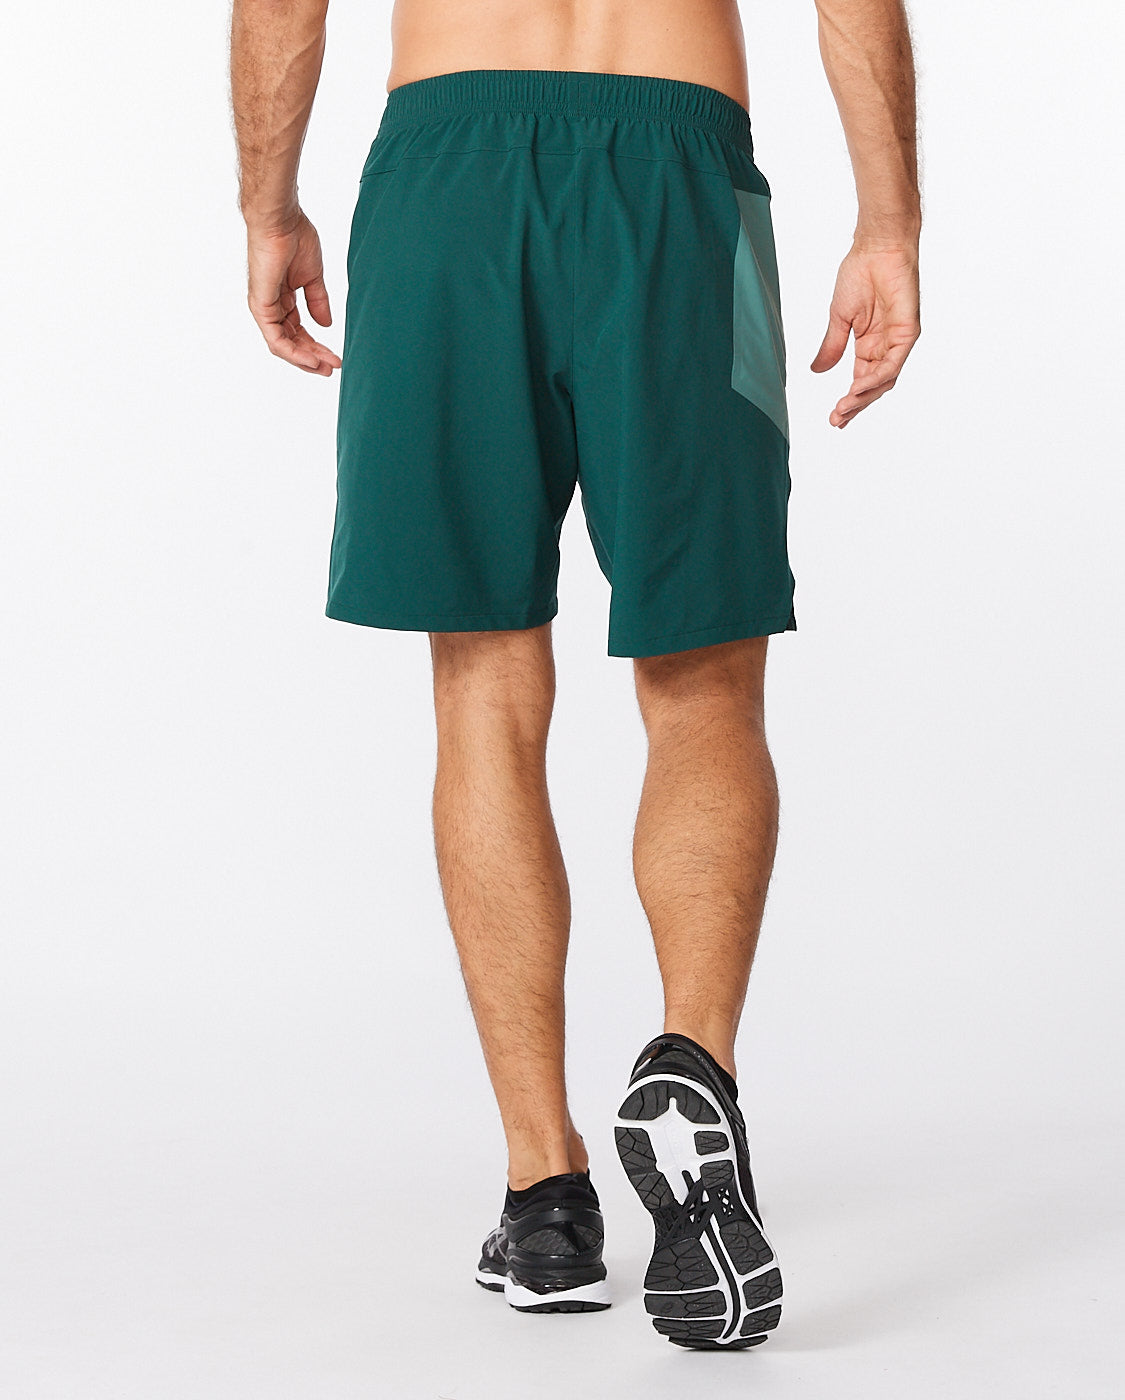 Motion 8 inch shorts - Pine/silver sage - Shorts